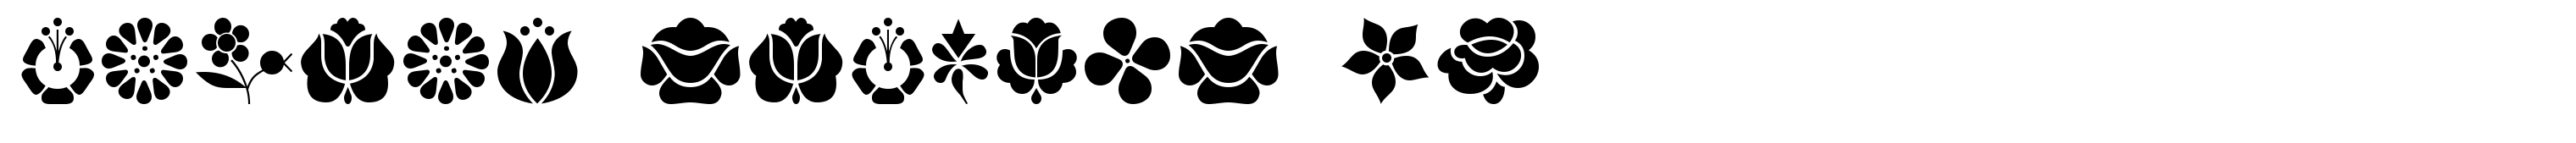 Magyar Symbols Pi